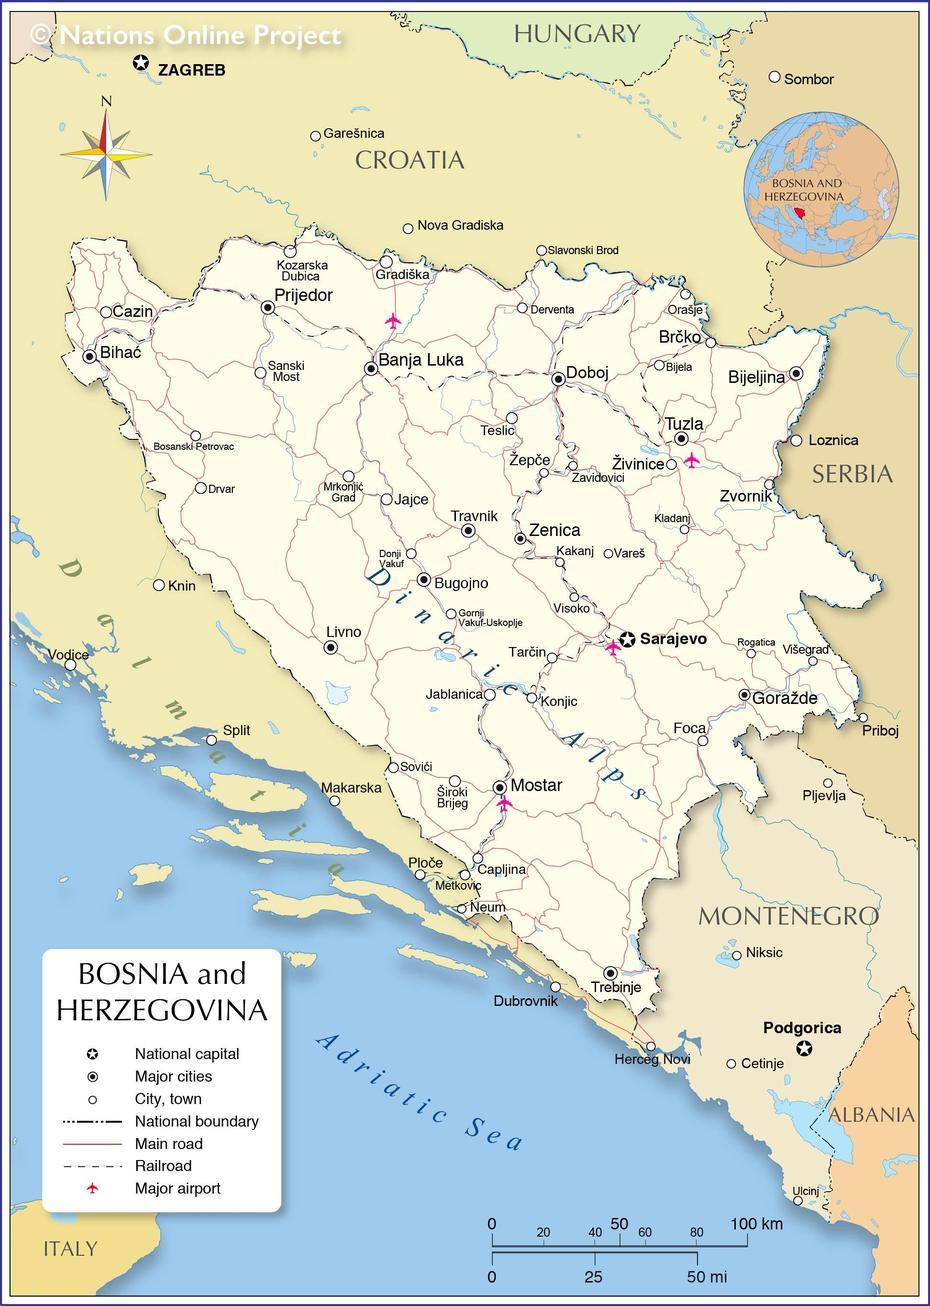 Bosnia World, Kravice Bosnia, Nations Online, Sarajevo, Bosnia And Herzegovina